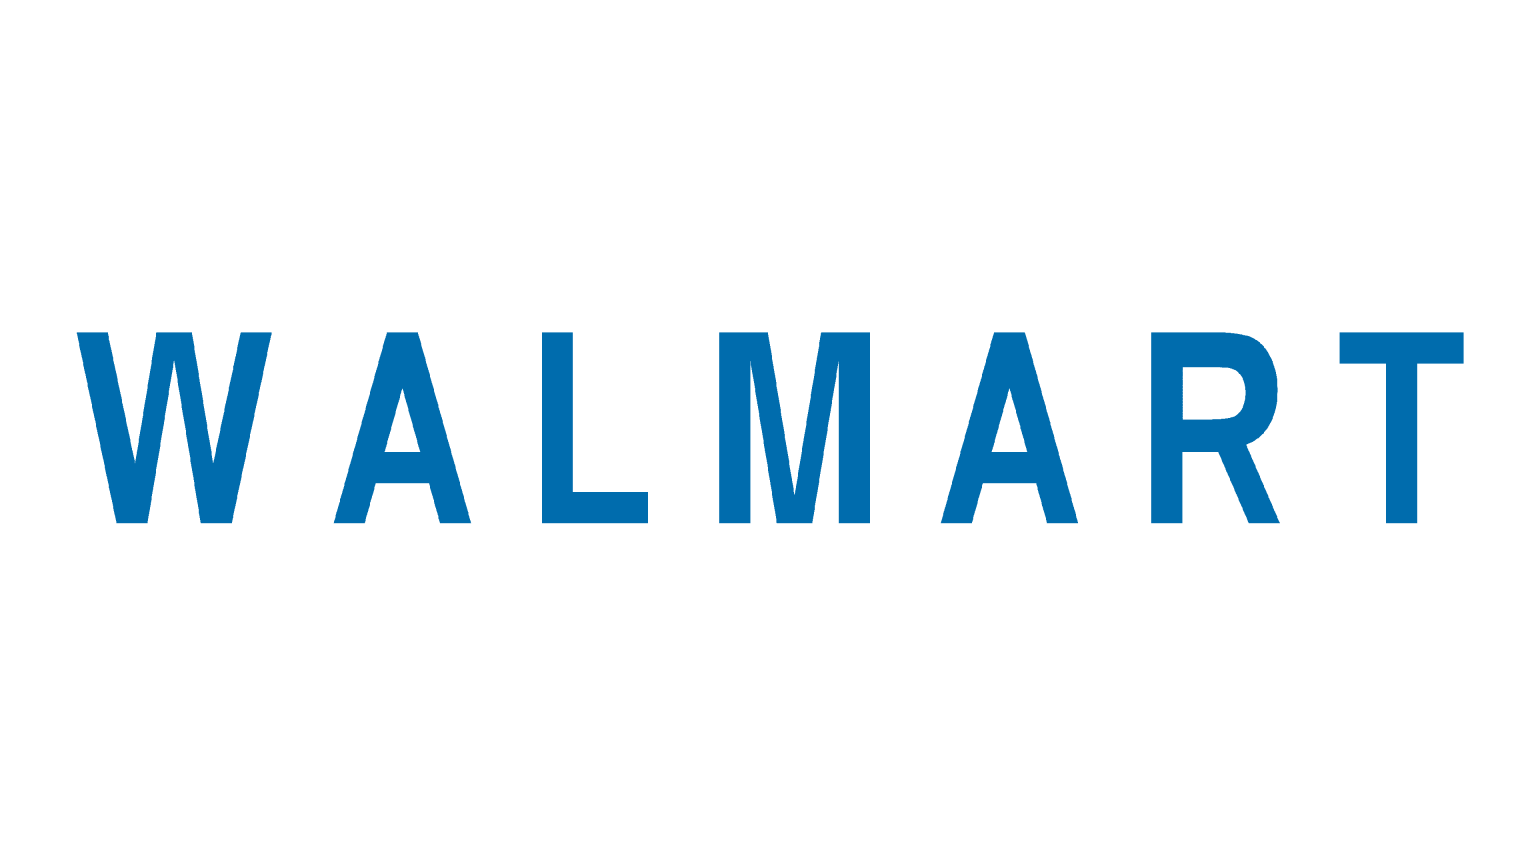 Walmart Rebrand, Our Work